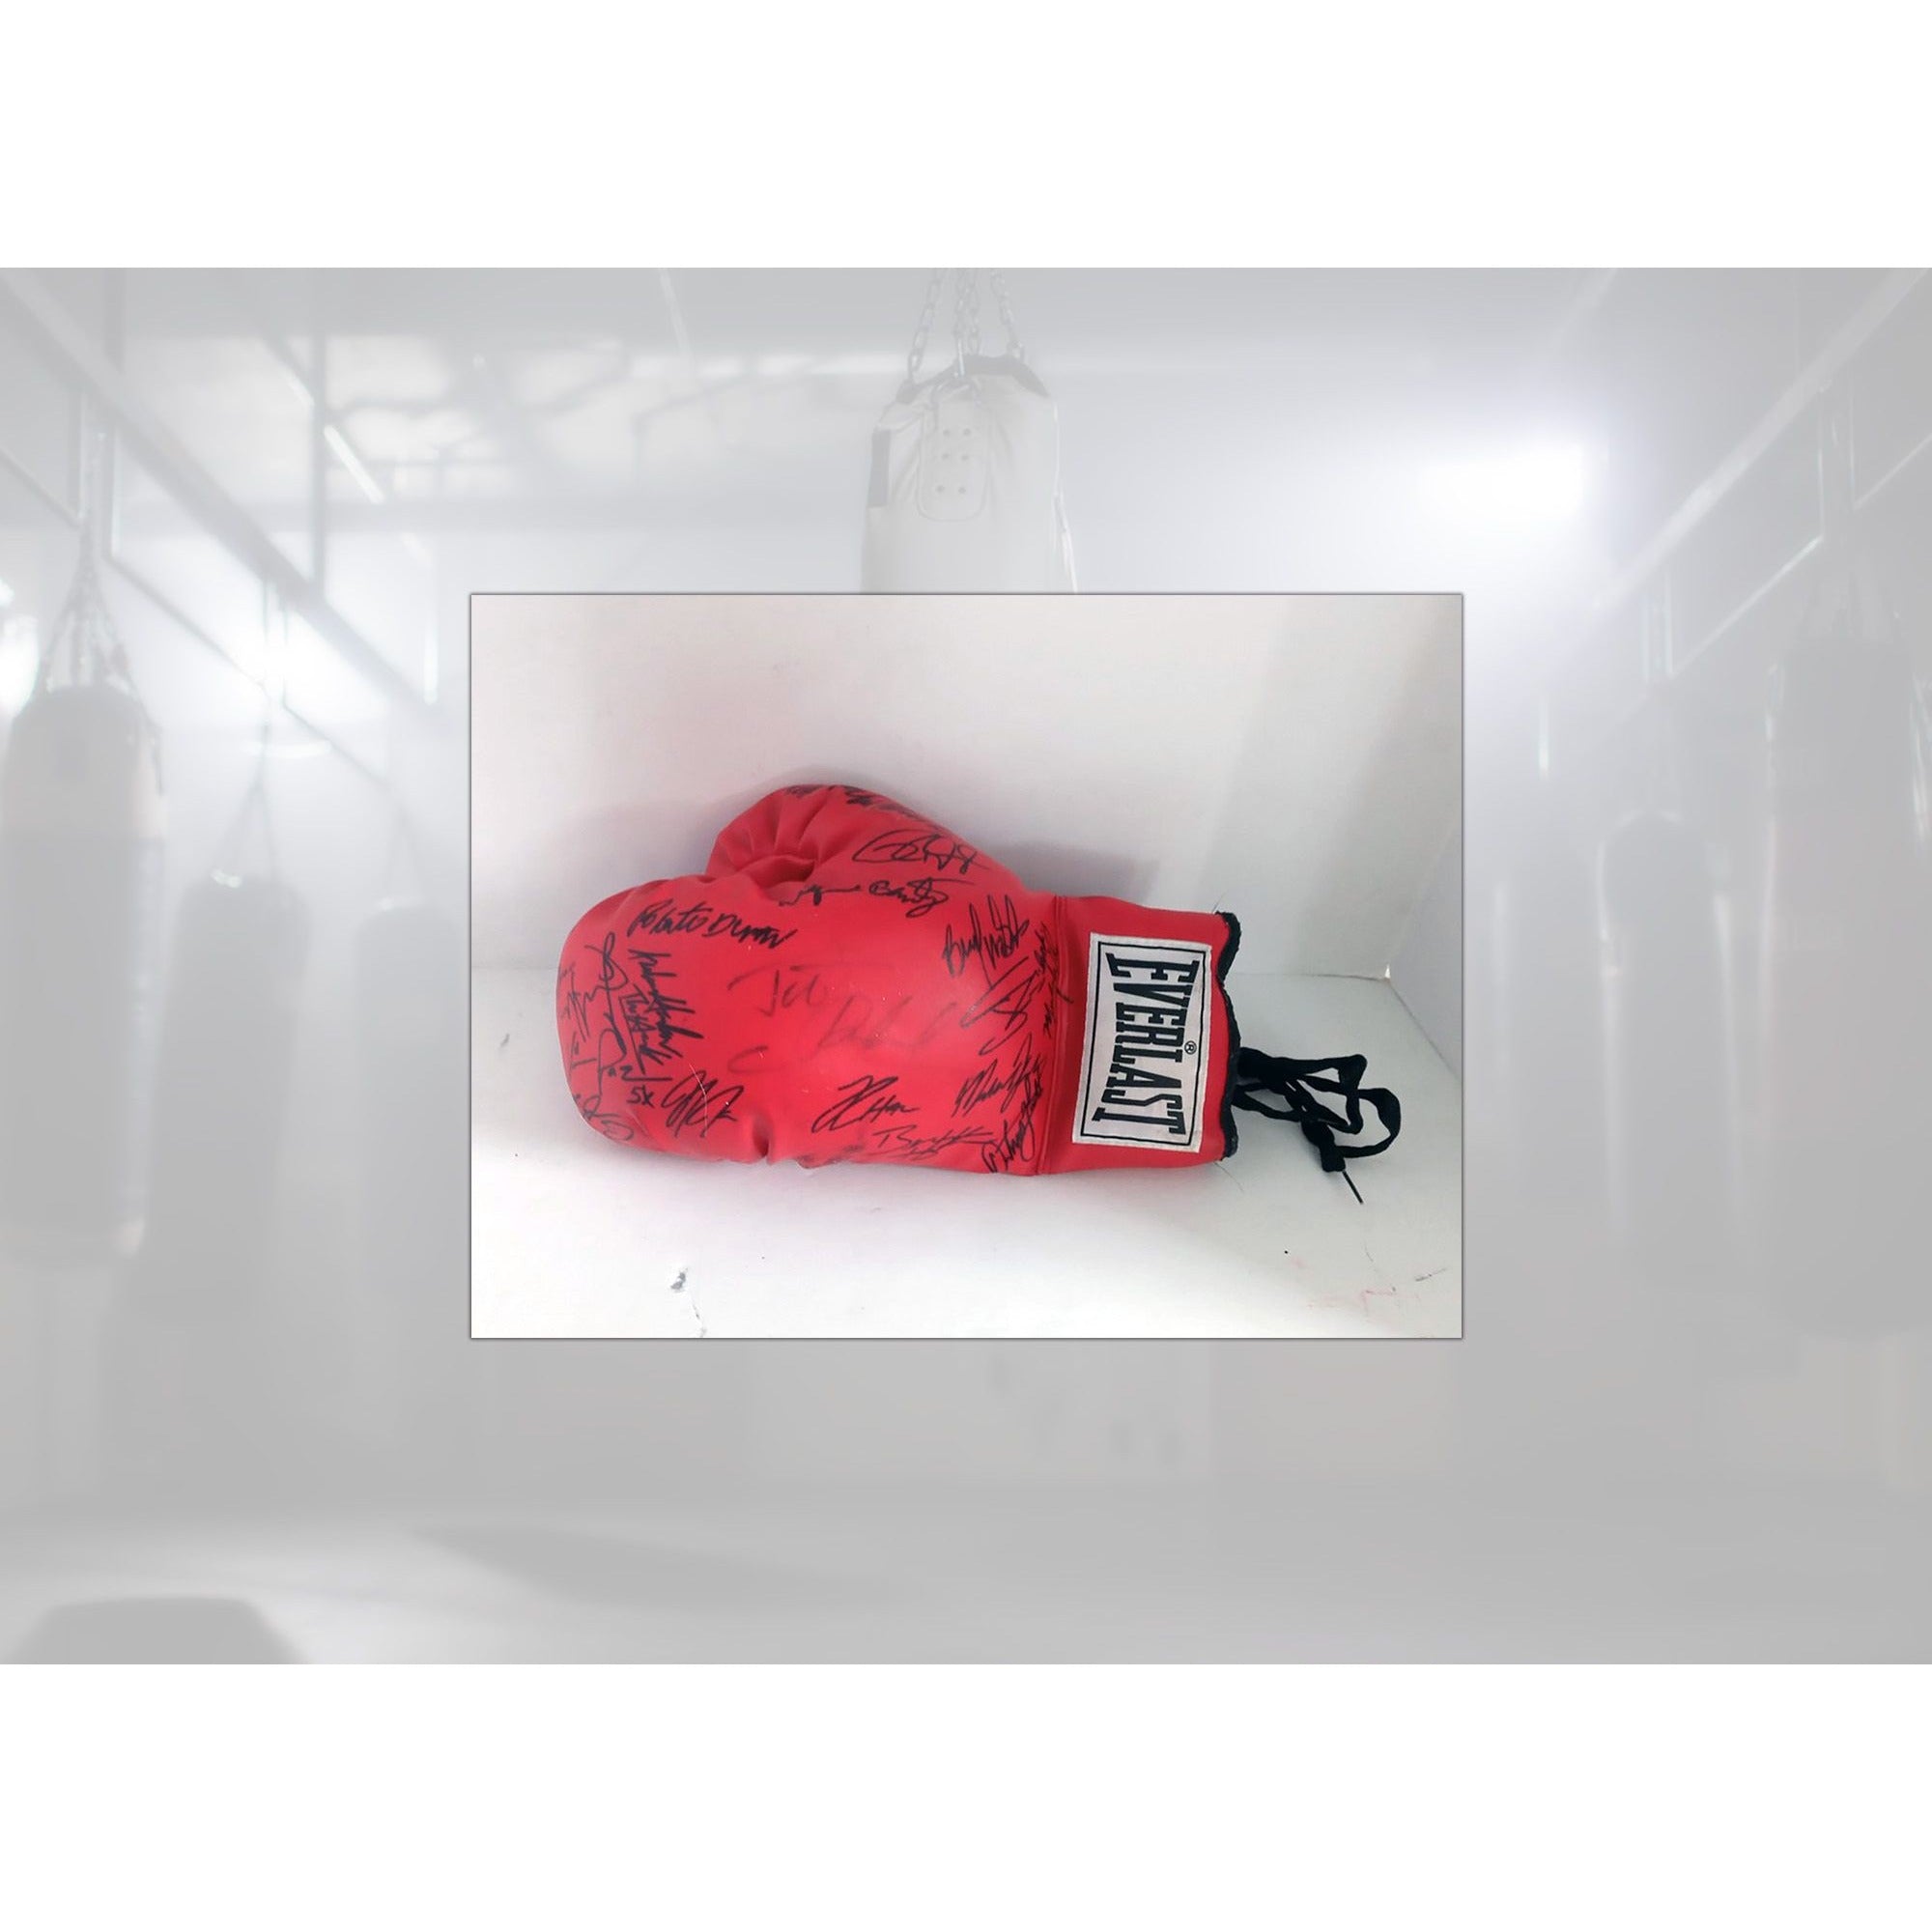 Johnny Tapia, Julio Cesar Chavez, Wilfredo Benitez, Roberto Duran 18 boxing Legend signed glove with proof